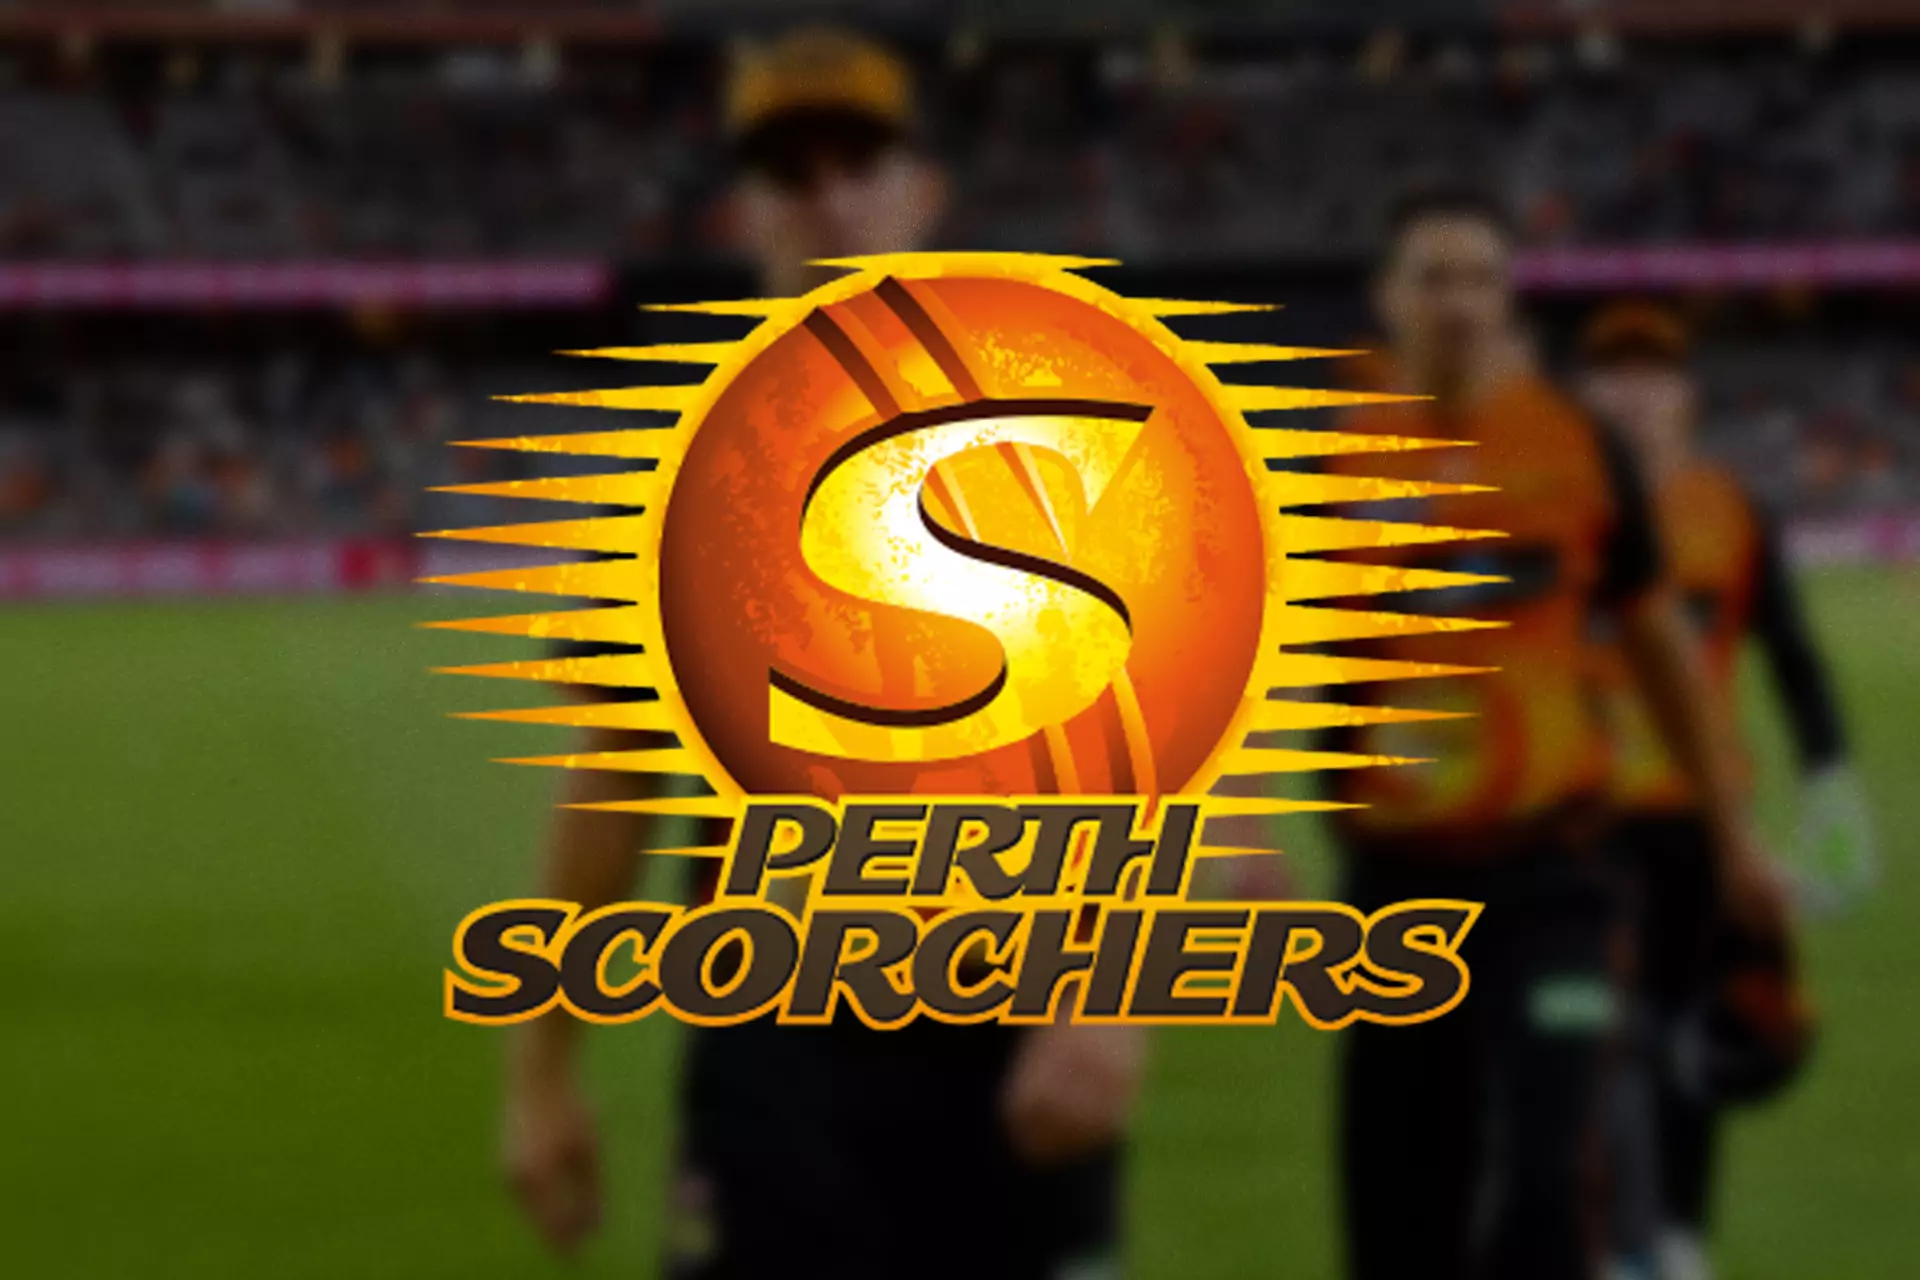 The Perth Scorchers team has three wins in the Big Bash League.